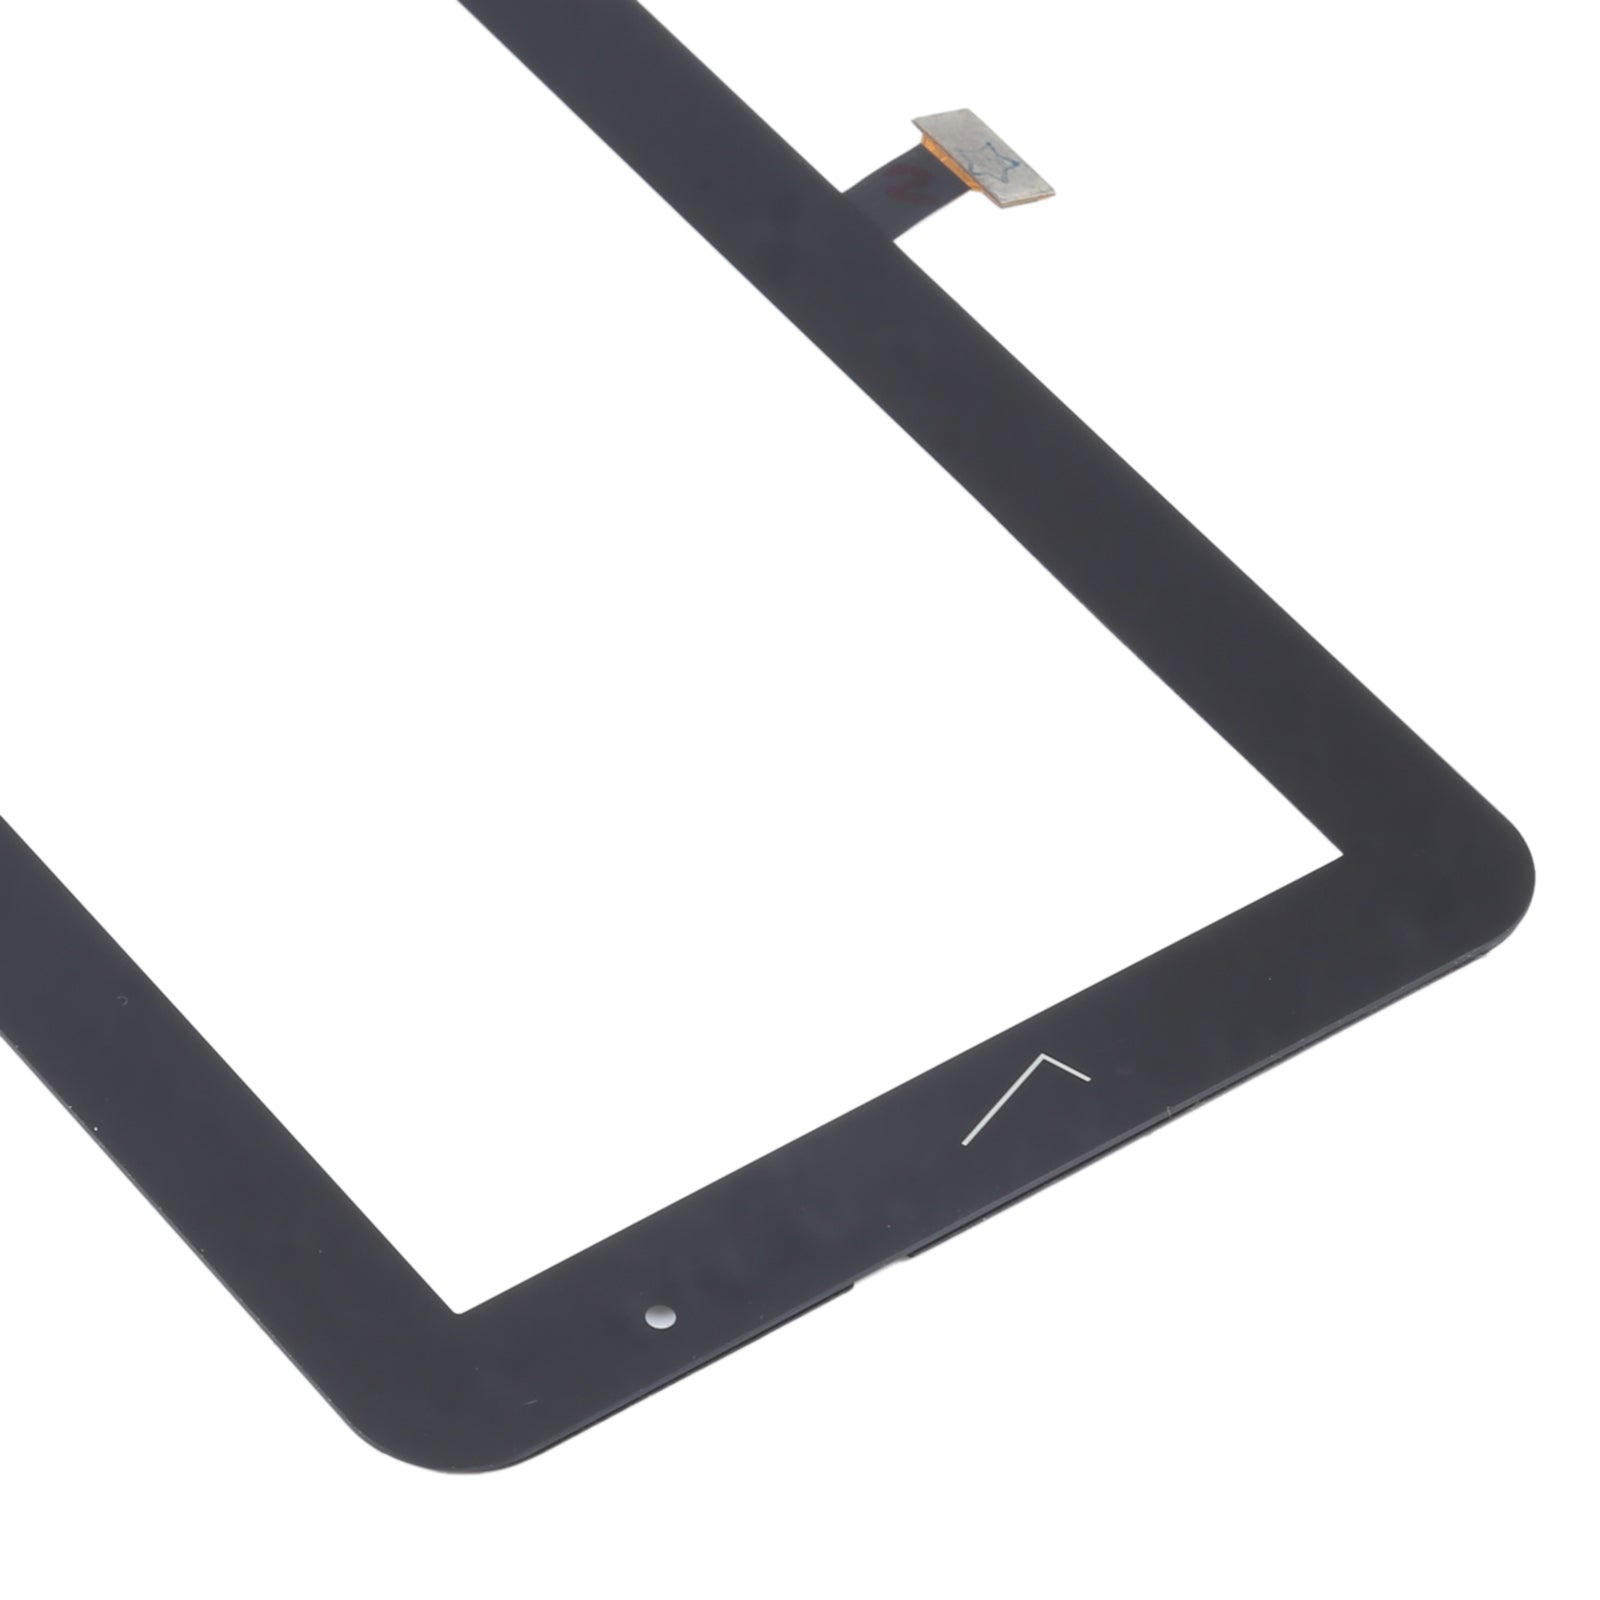 Touch Screen Digitizer Samsung Galaxy Tab 2 7.0 P3110 (V Version) Black